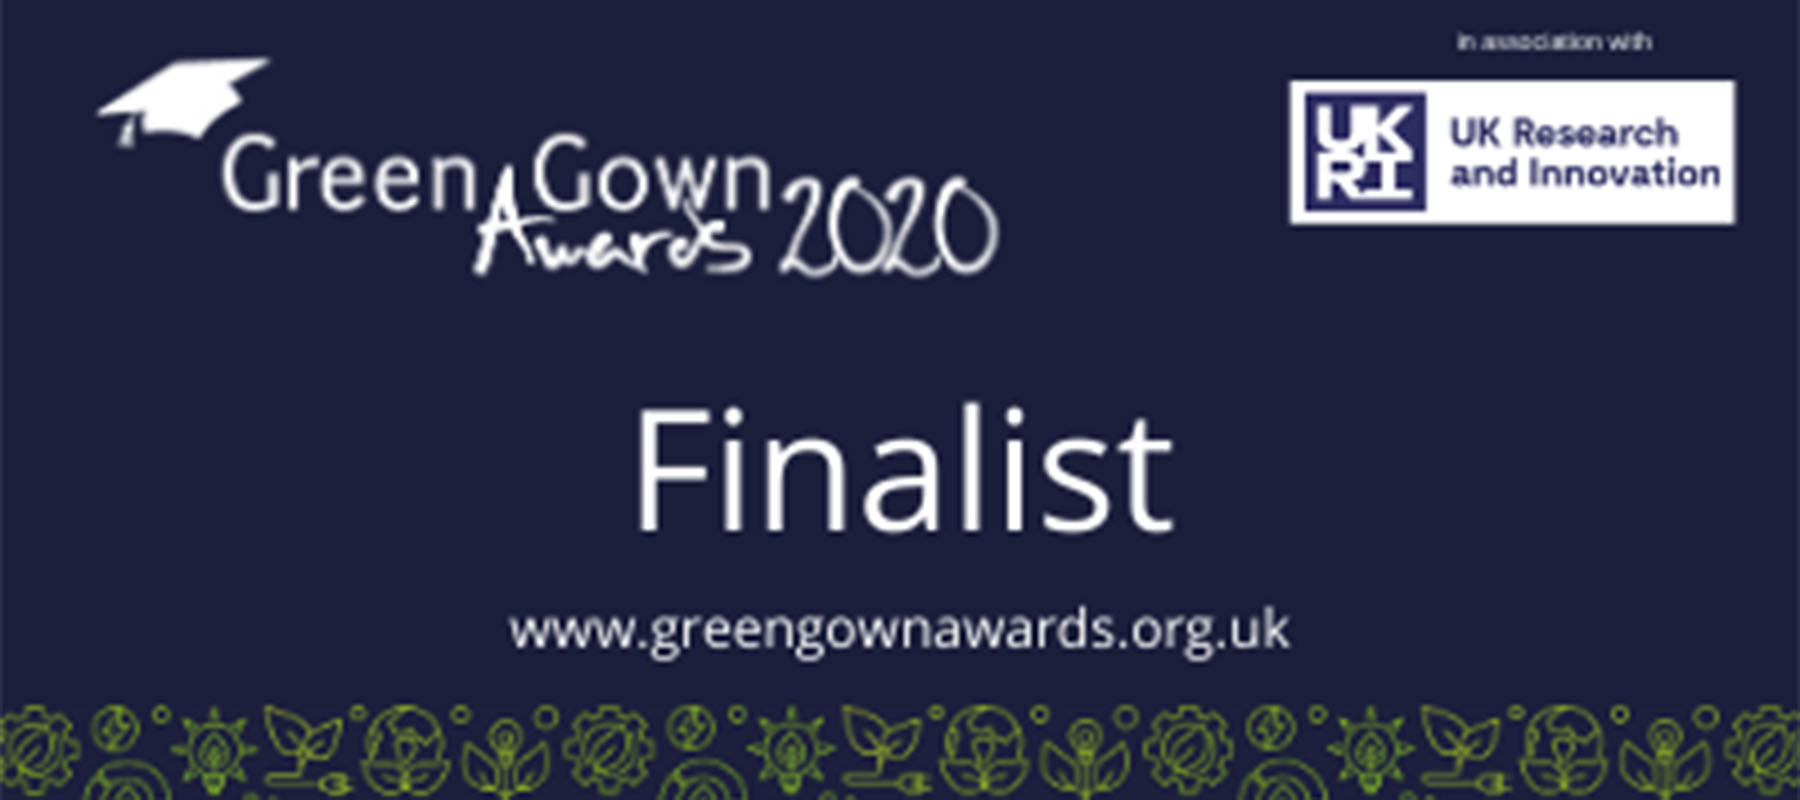 Green Gown Awards Announcement banner